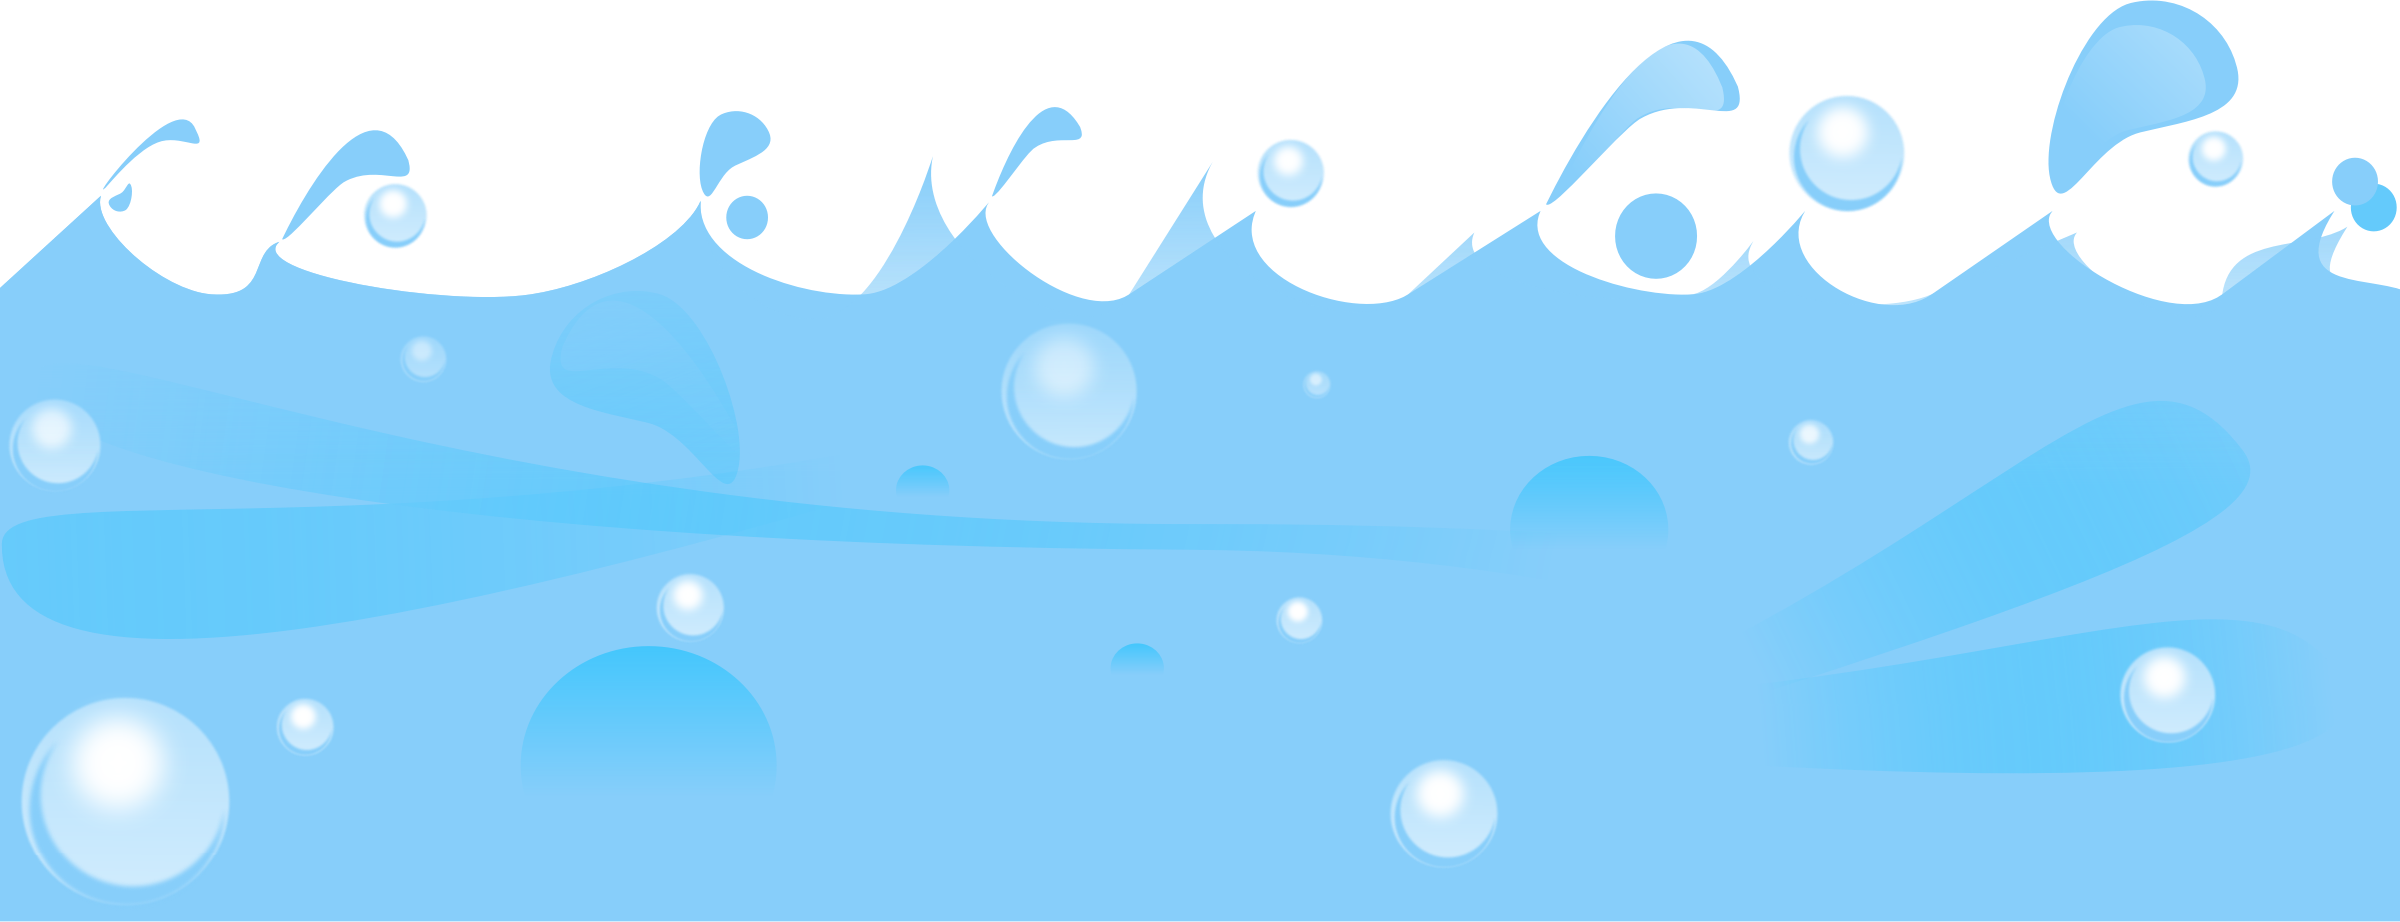 Fish logo big image. Water clipart sky